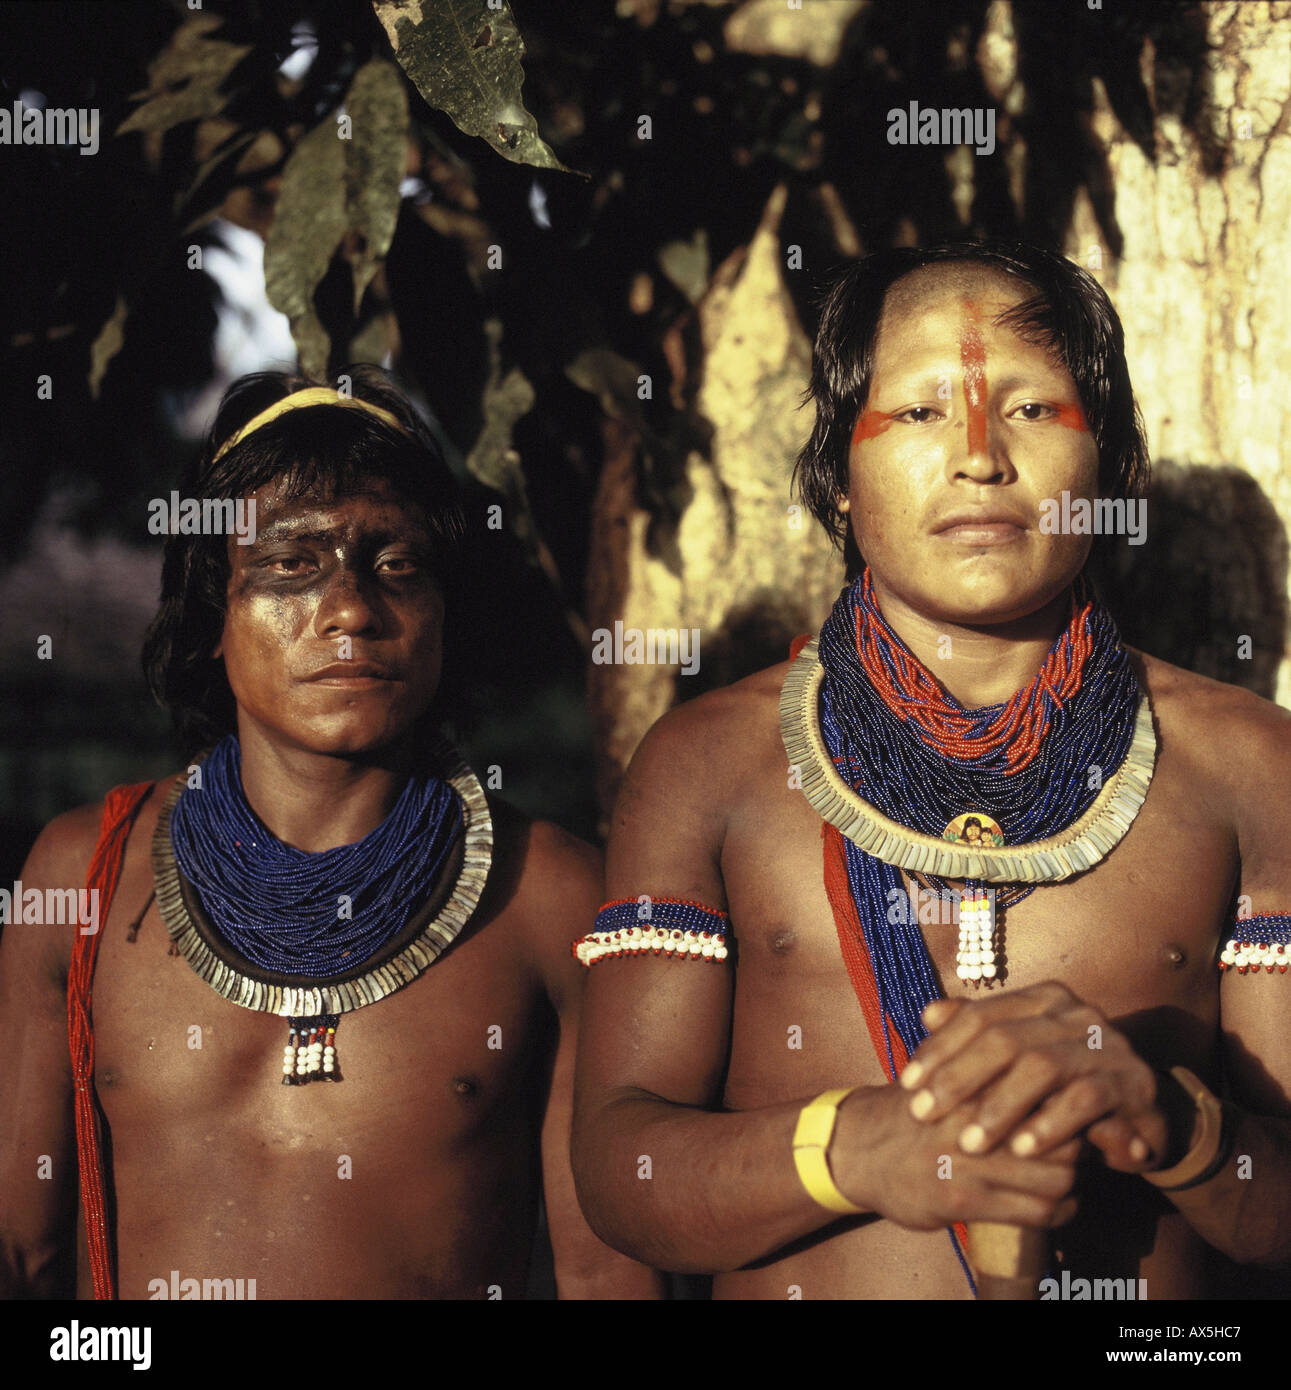 Xingu Fotos Und Bildmaterial In Hoher Auflösung Alamy 